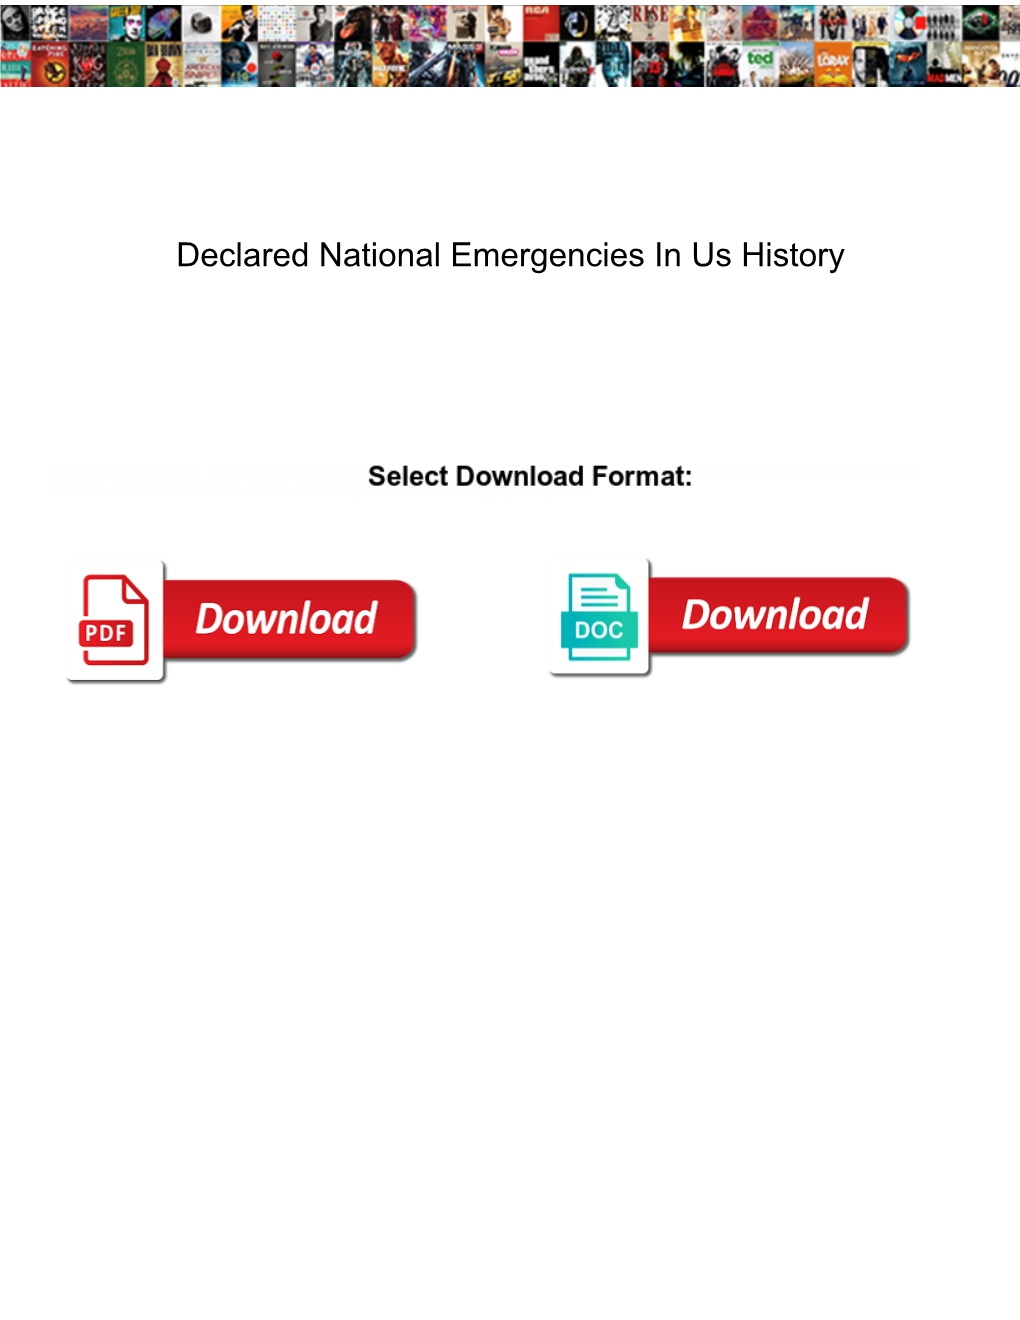 Declared National Emergencies in Us History